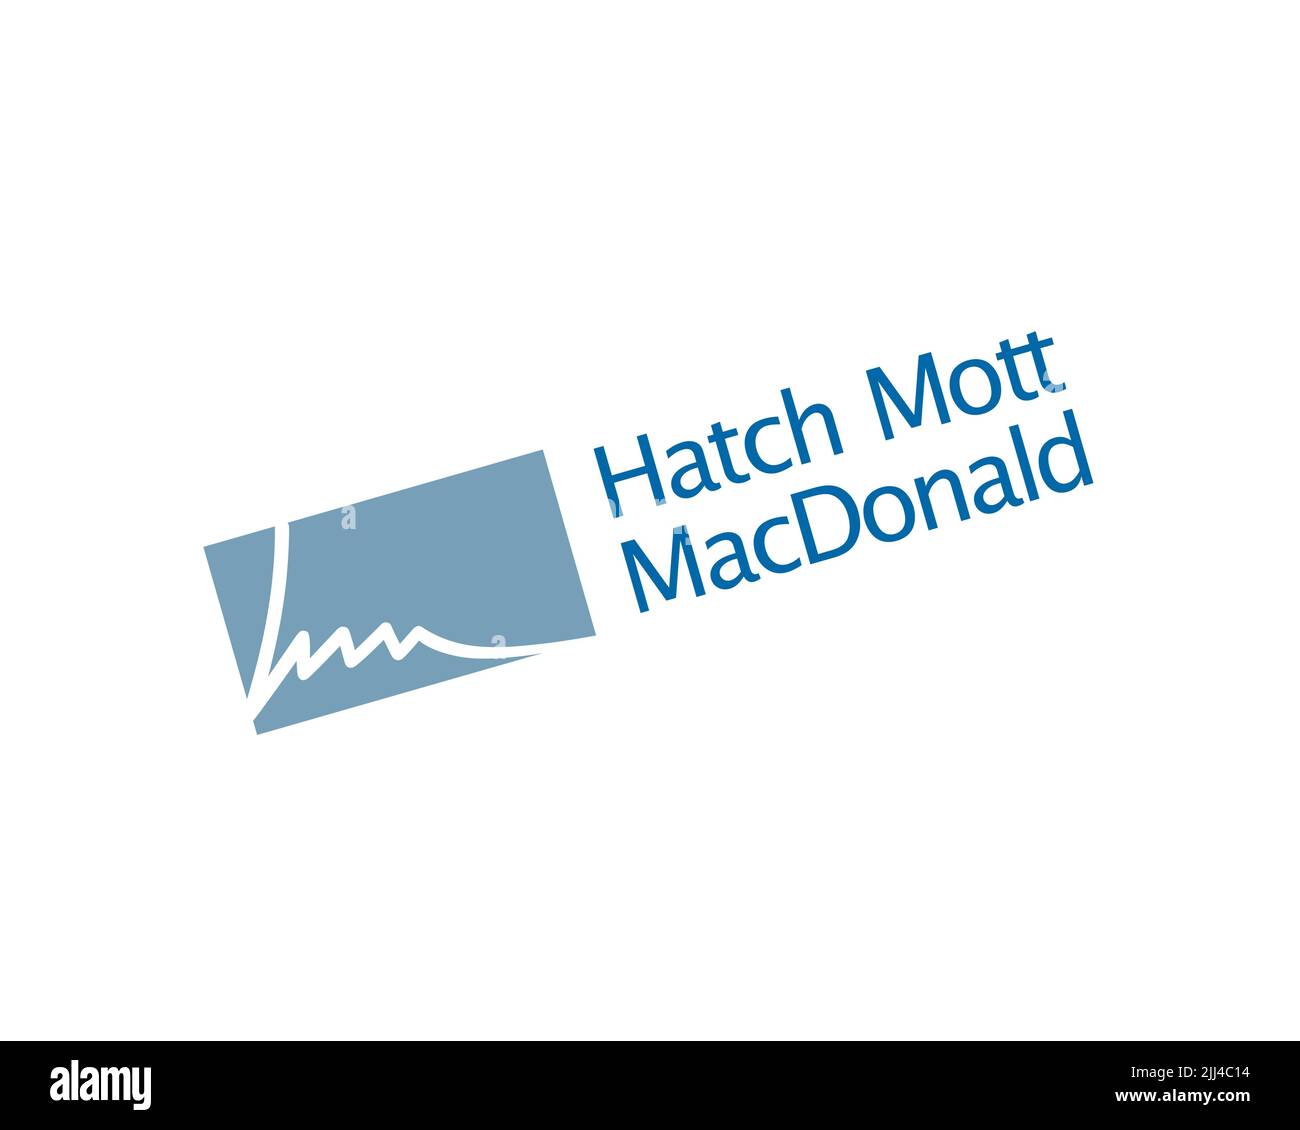 Hatch Mott MacDonald, Rotated Logo, White Background Stock Photo - Alamy